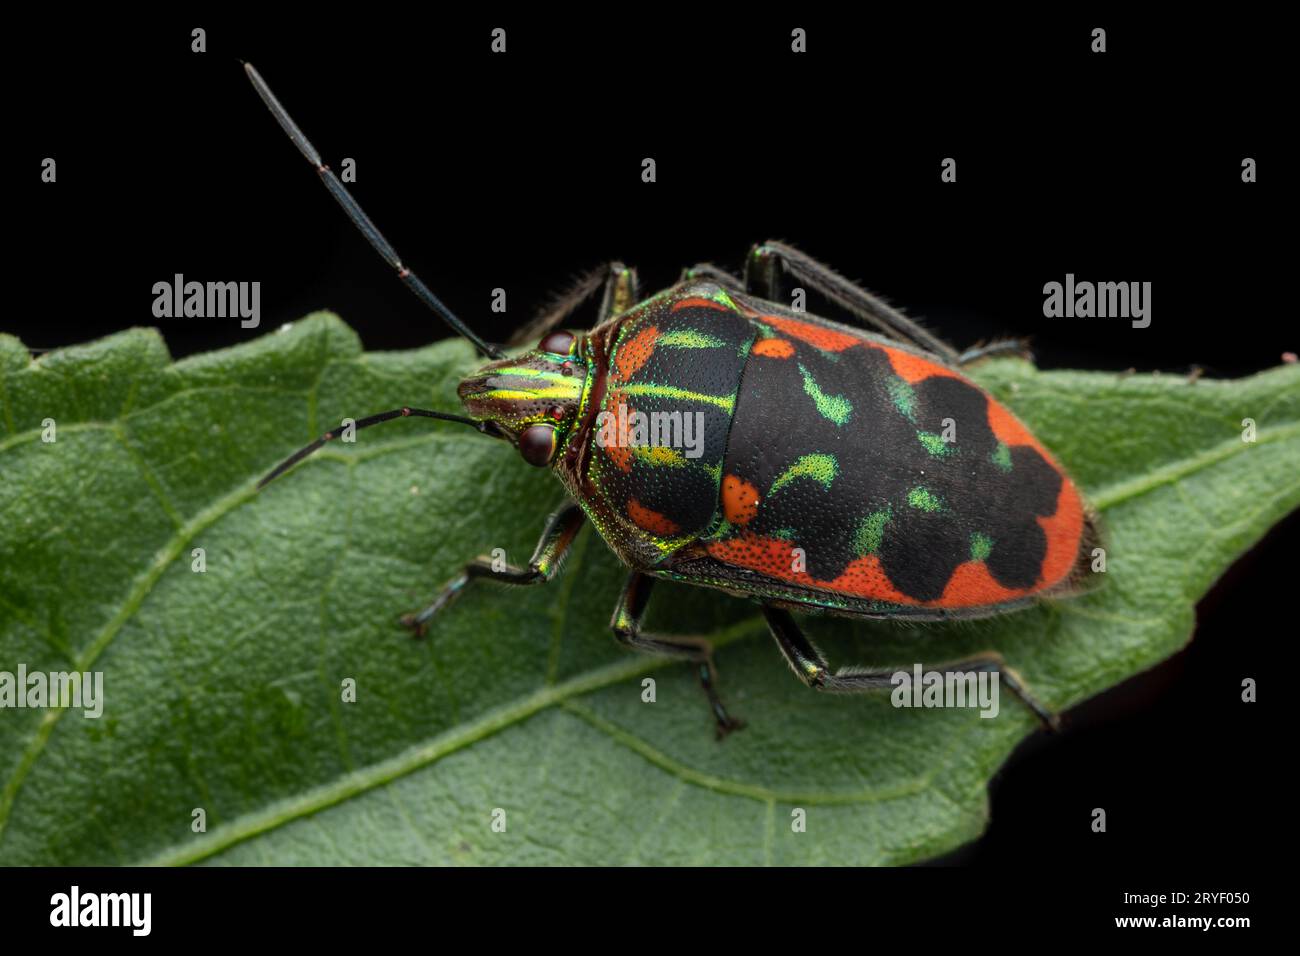 Nature wildlife of beautiful Jewel bug on green leaves Stock Photo